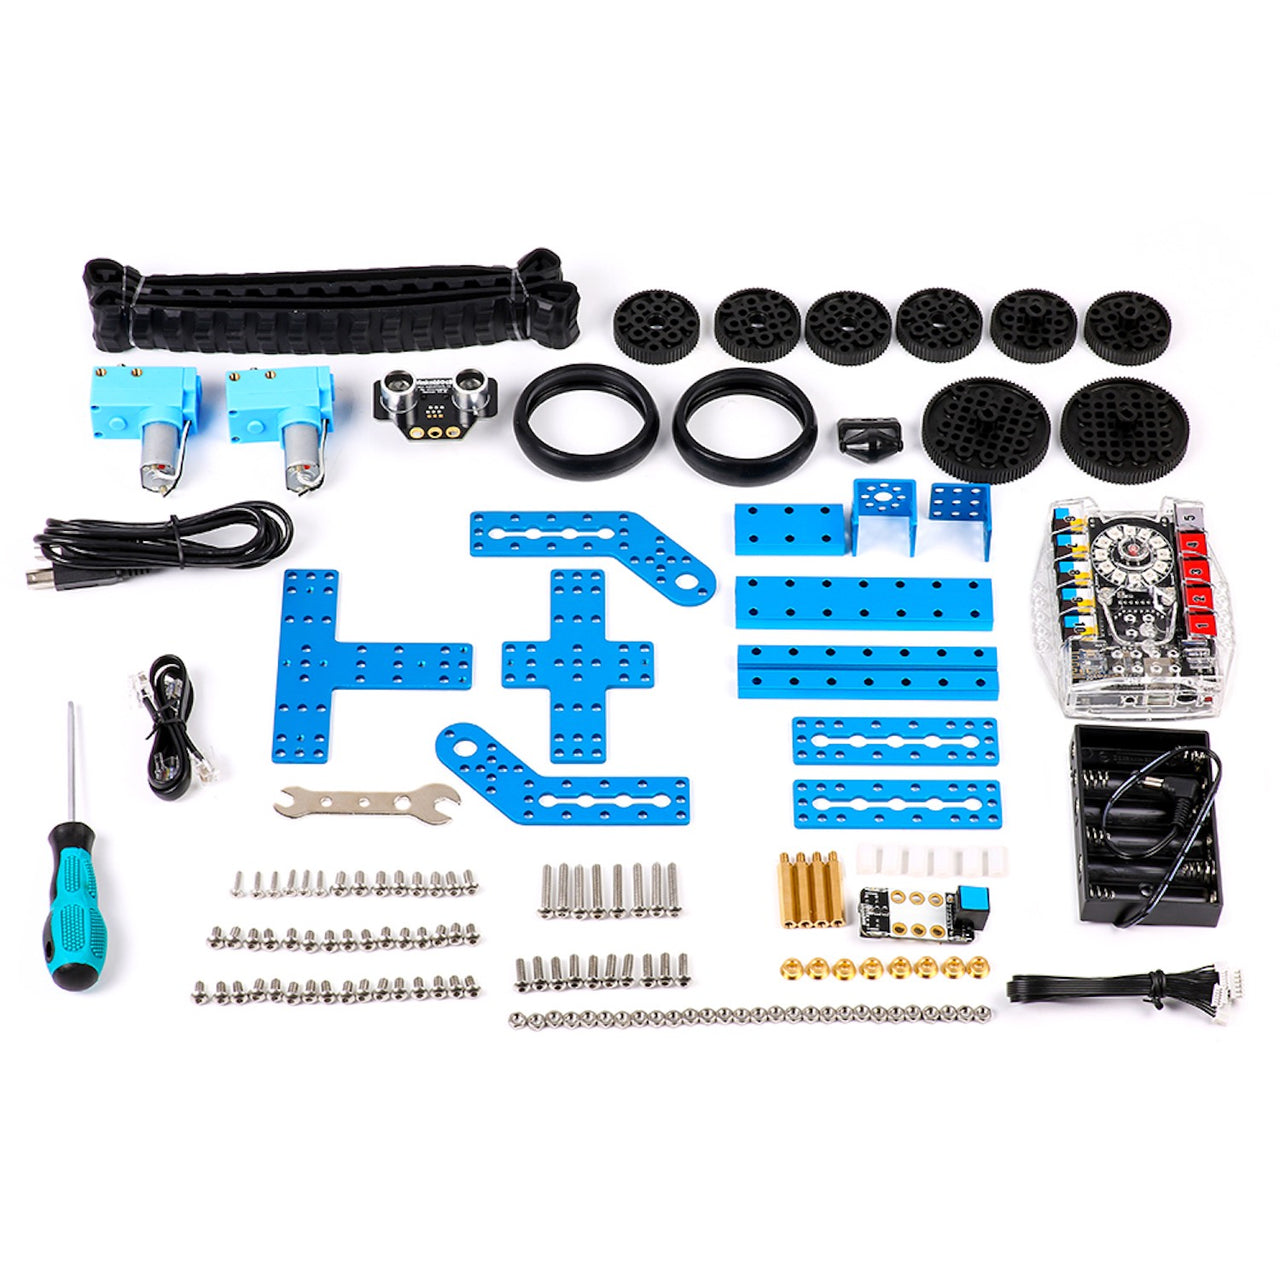 mbot ranger - transformable stem educational robot kit (bluetooth version)